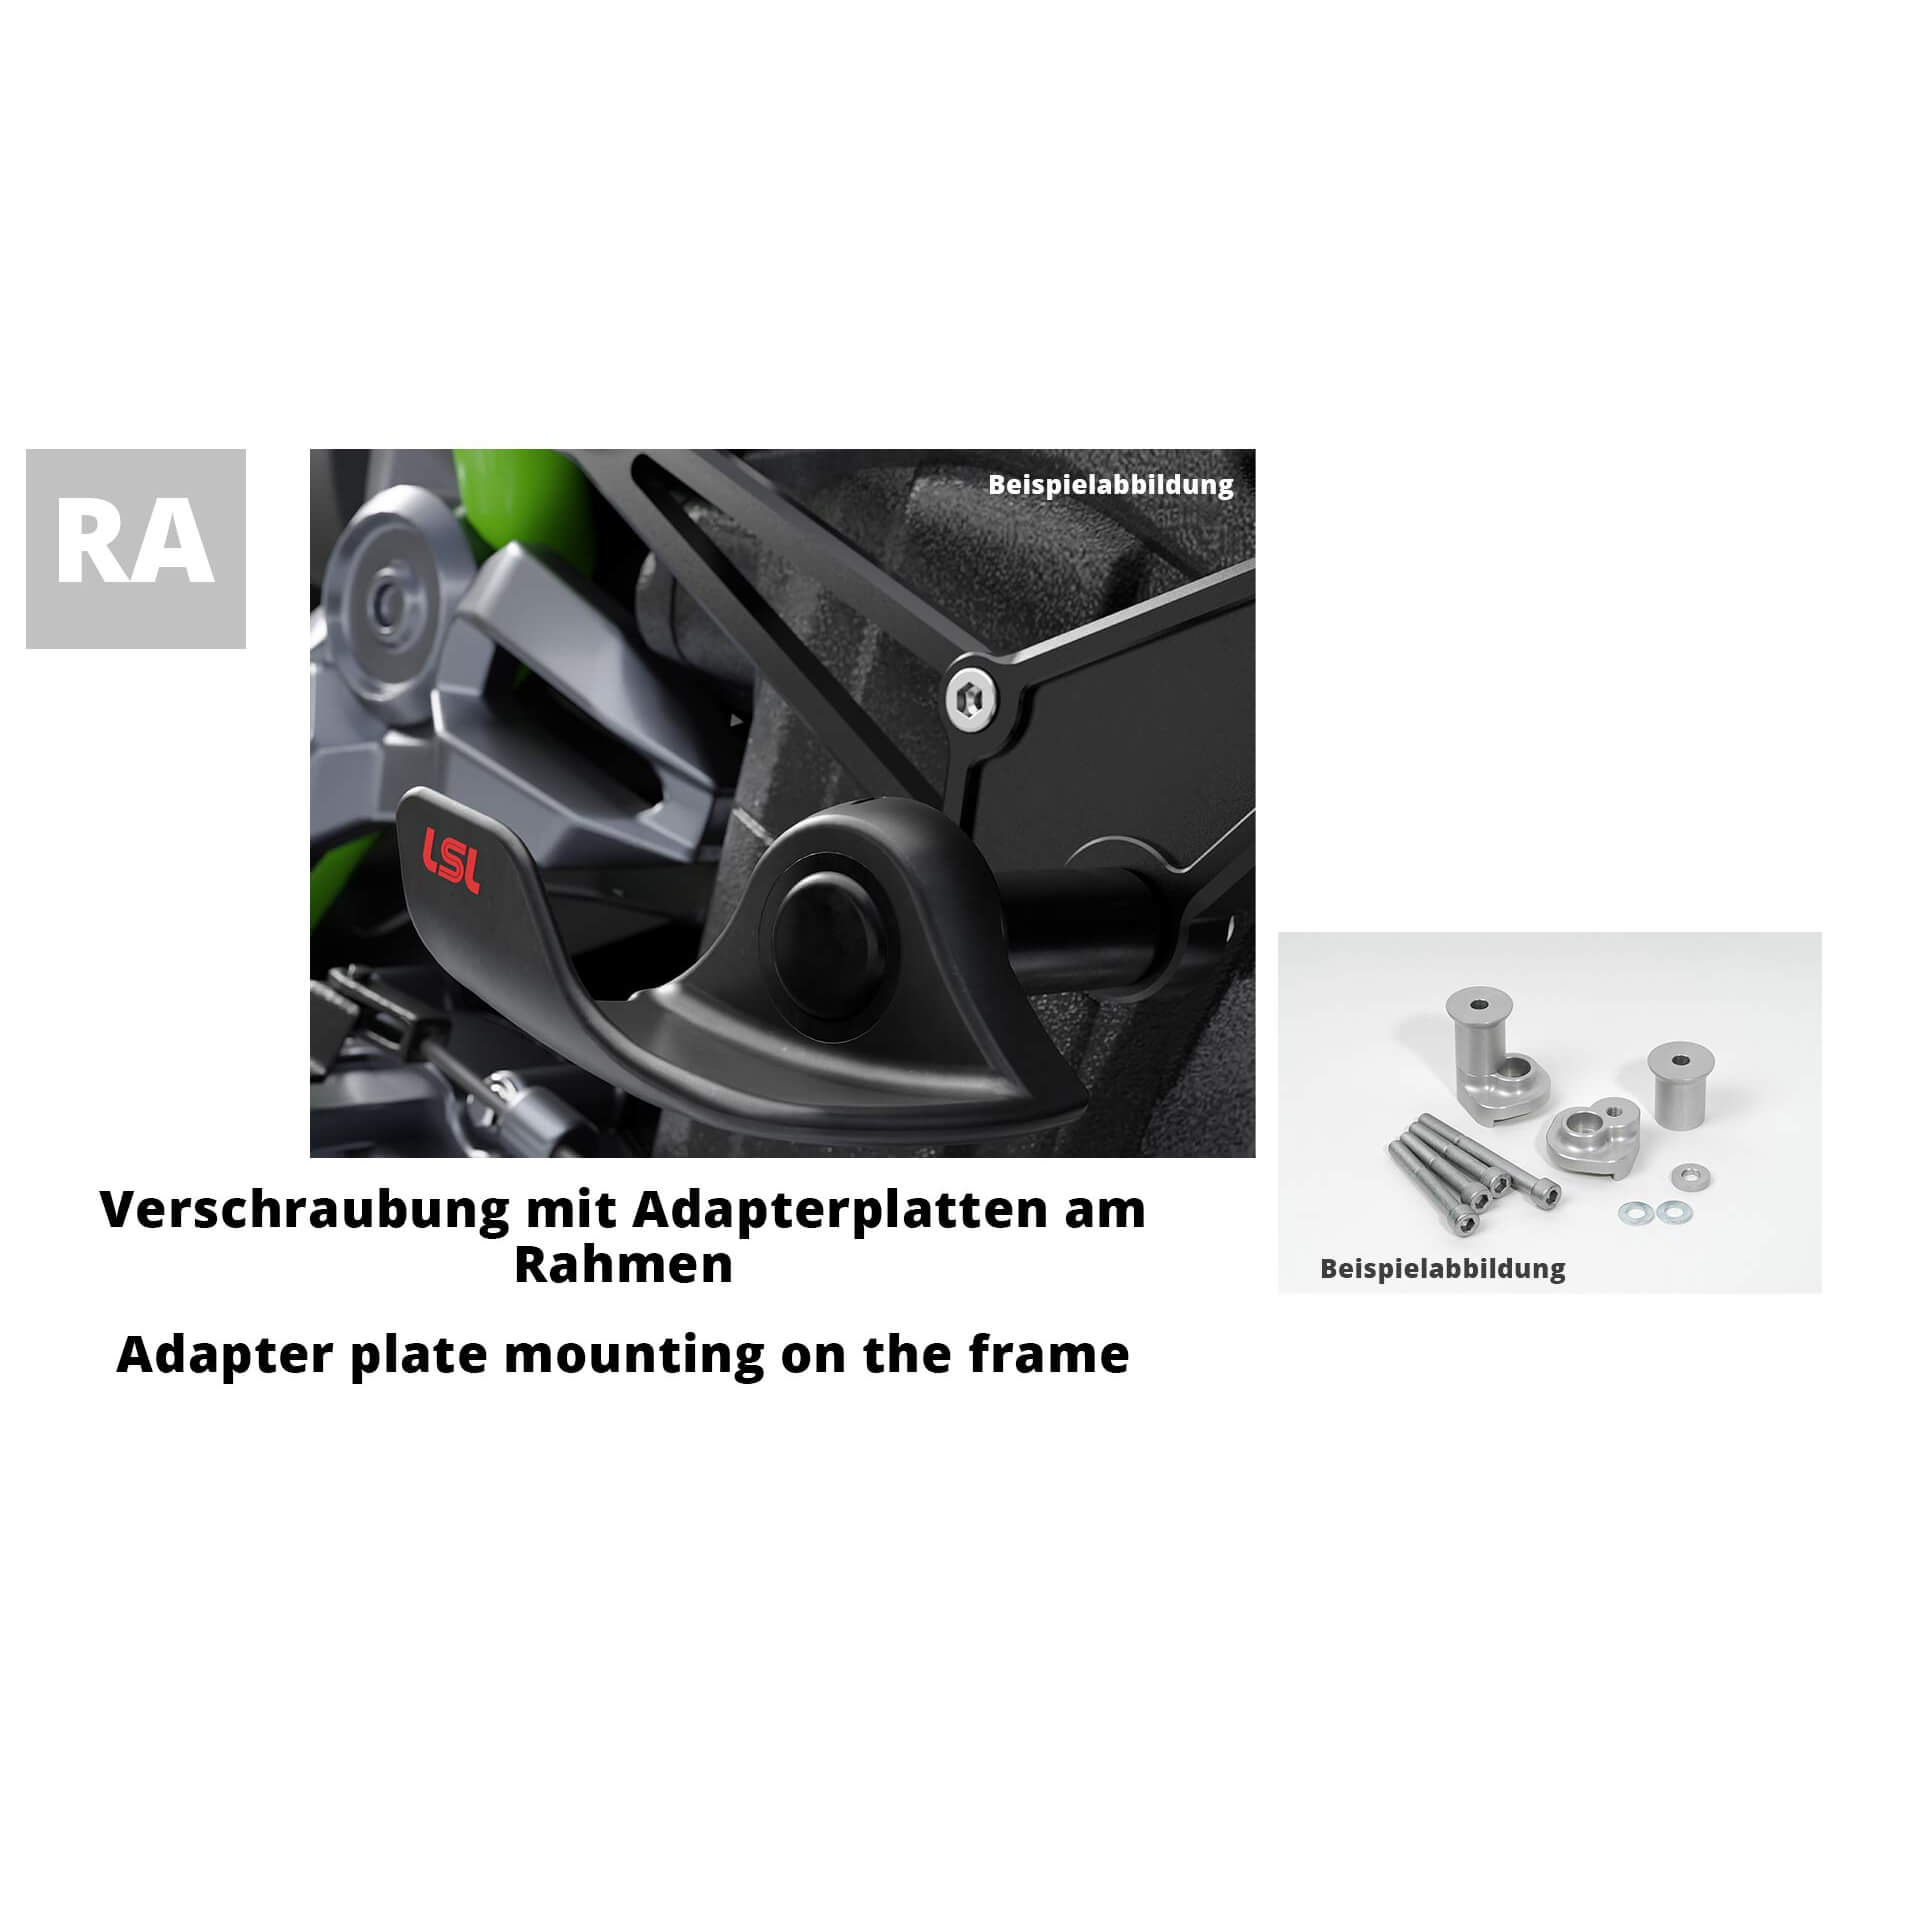 lsl Vervangstuk SlideWing Kit 550B032.3, BMW F800S/R